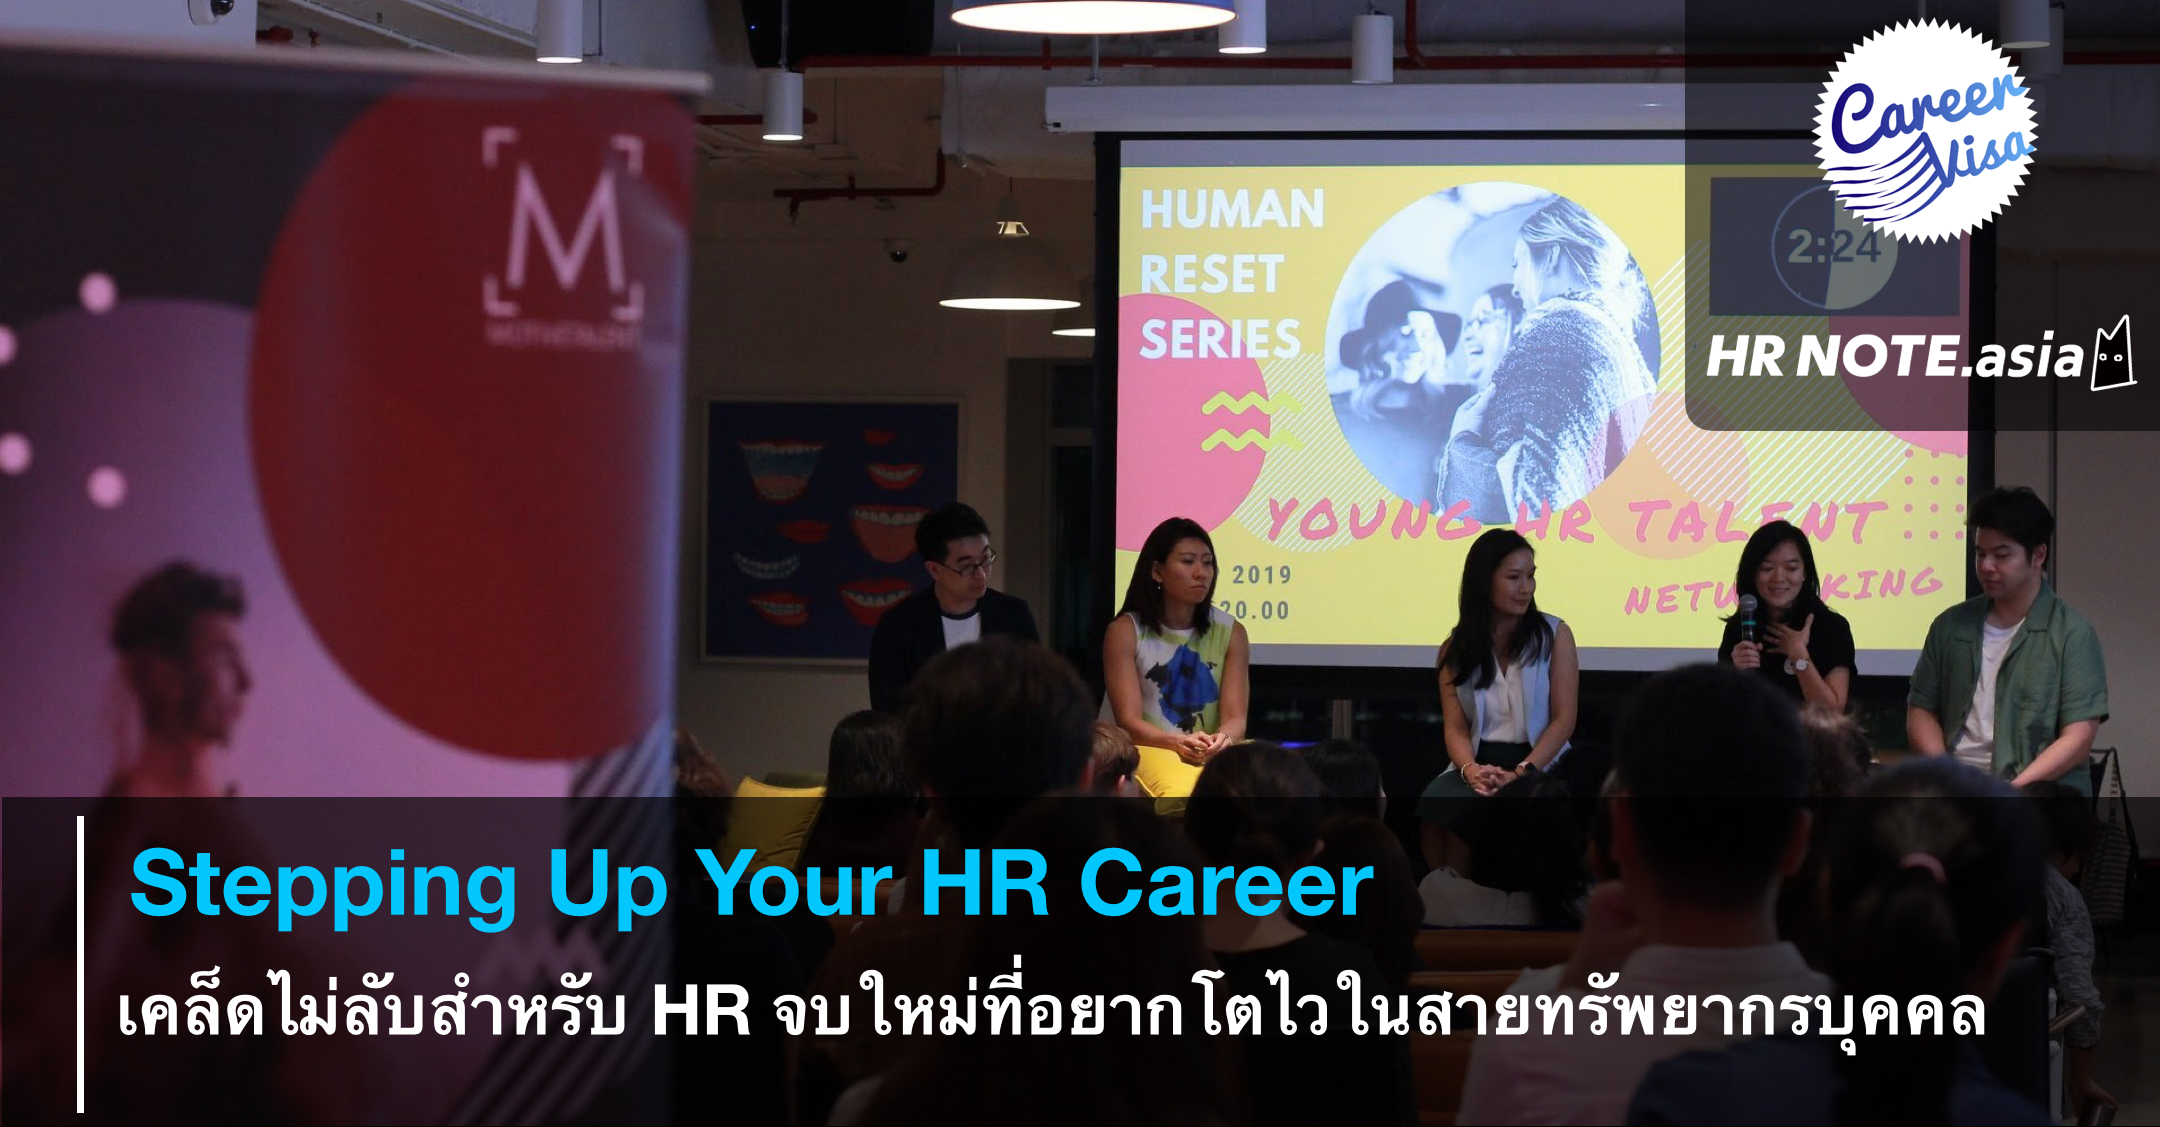 Stepping Up Your HR Career: HR ยุคใหม่ที่อยากโตไวต้องอ่าน [CareerVisa]